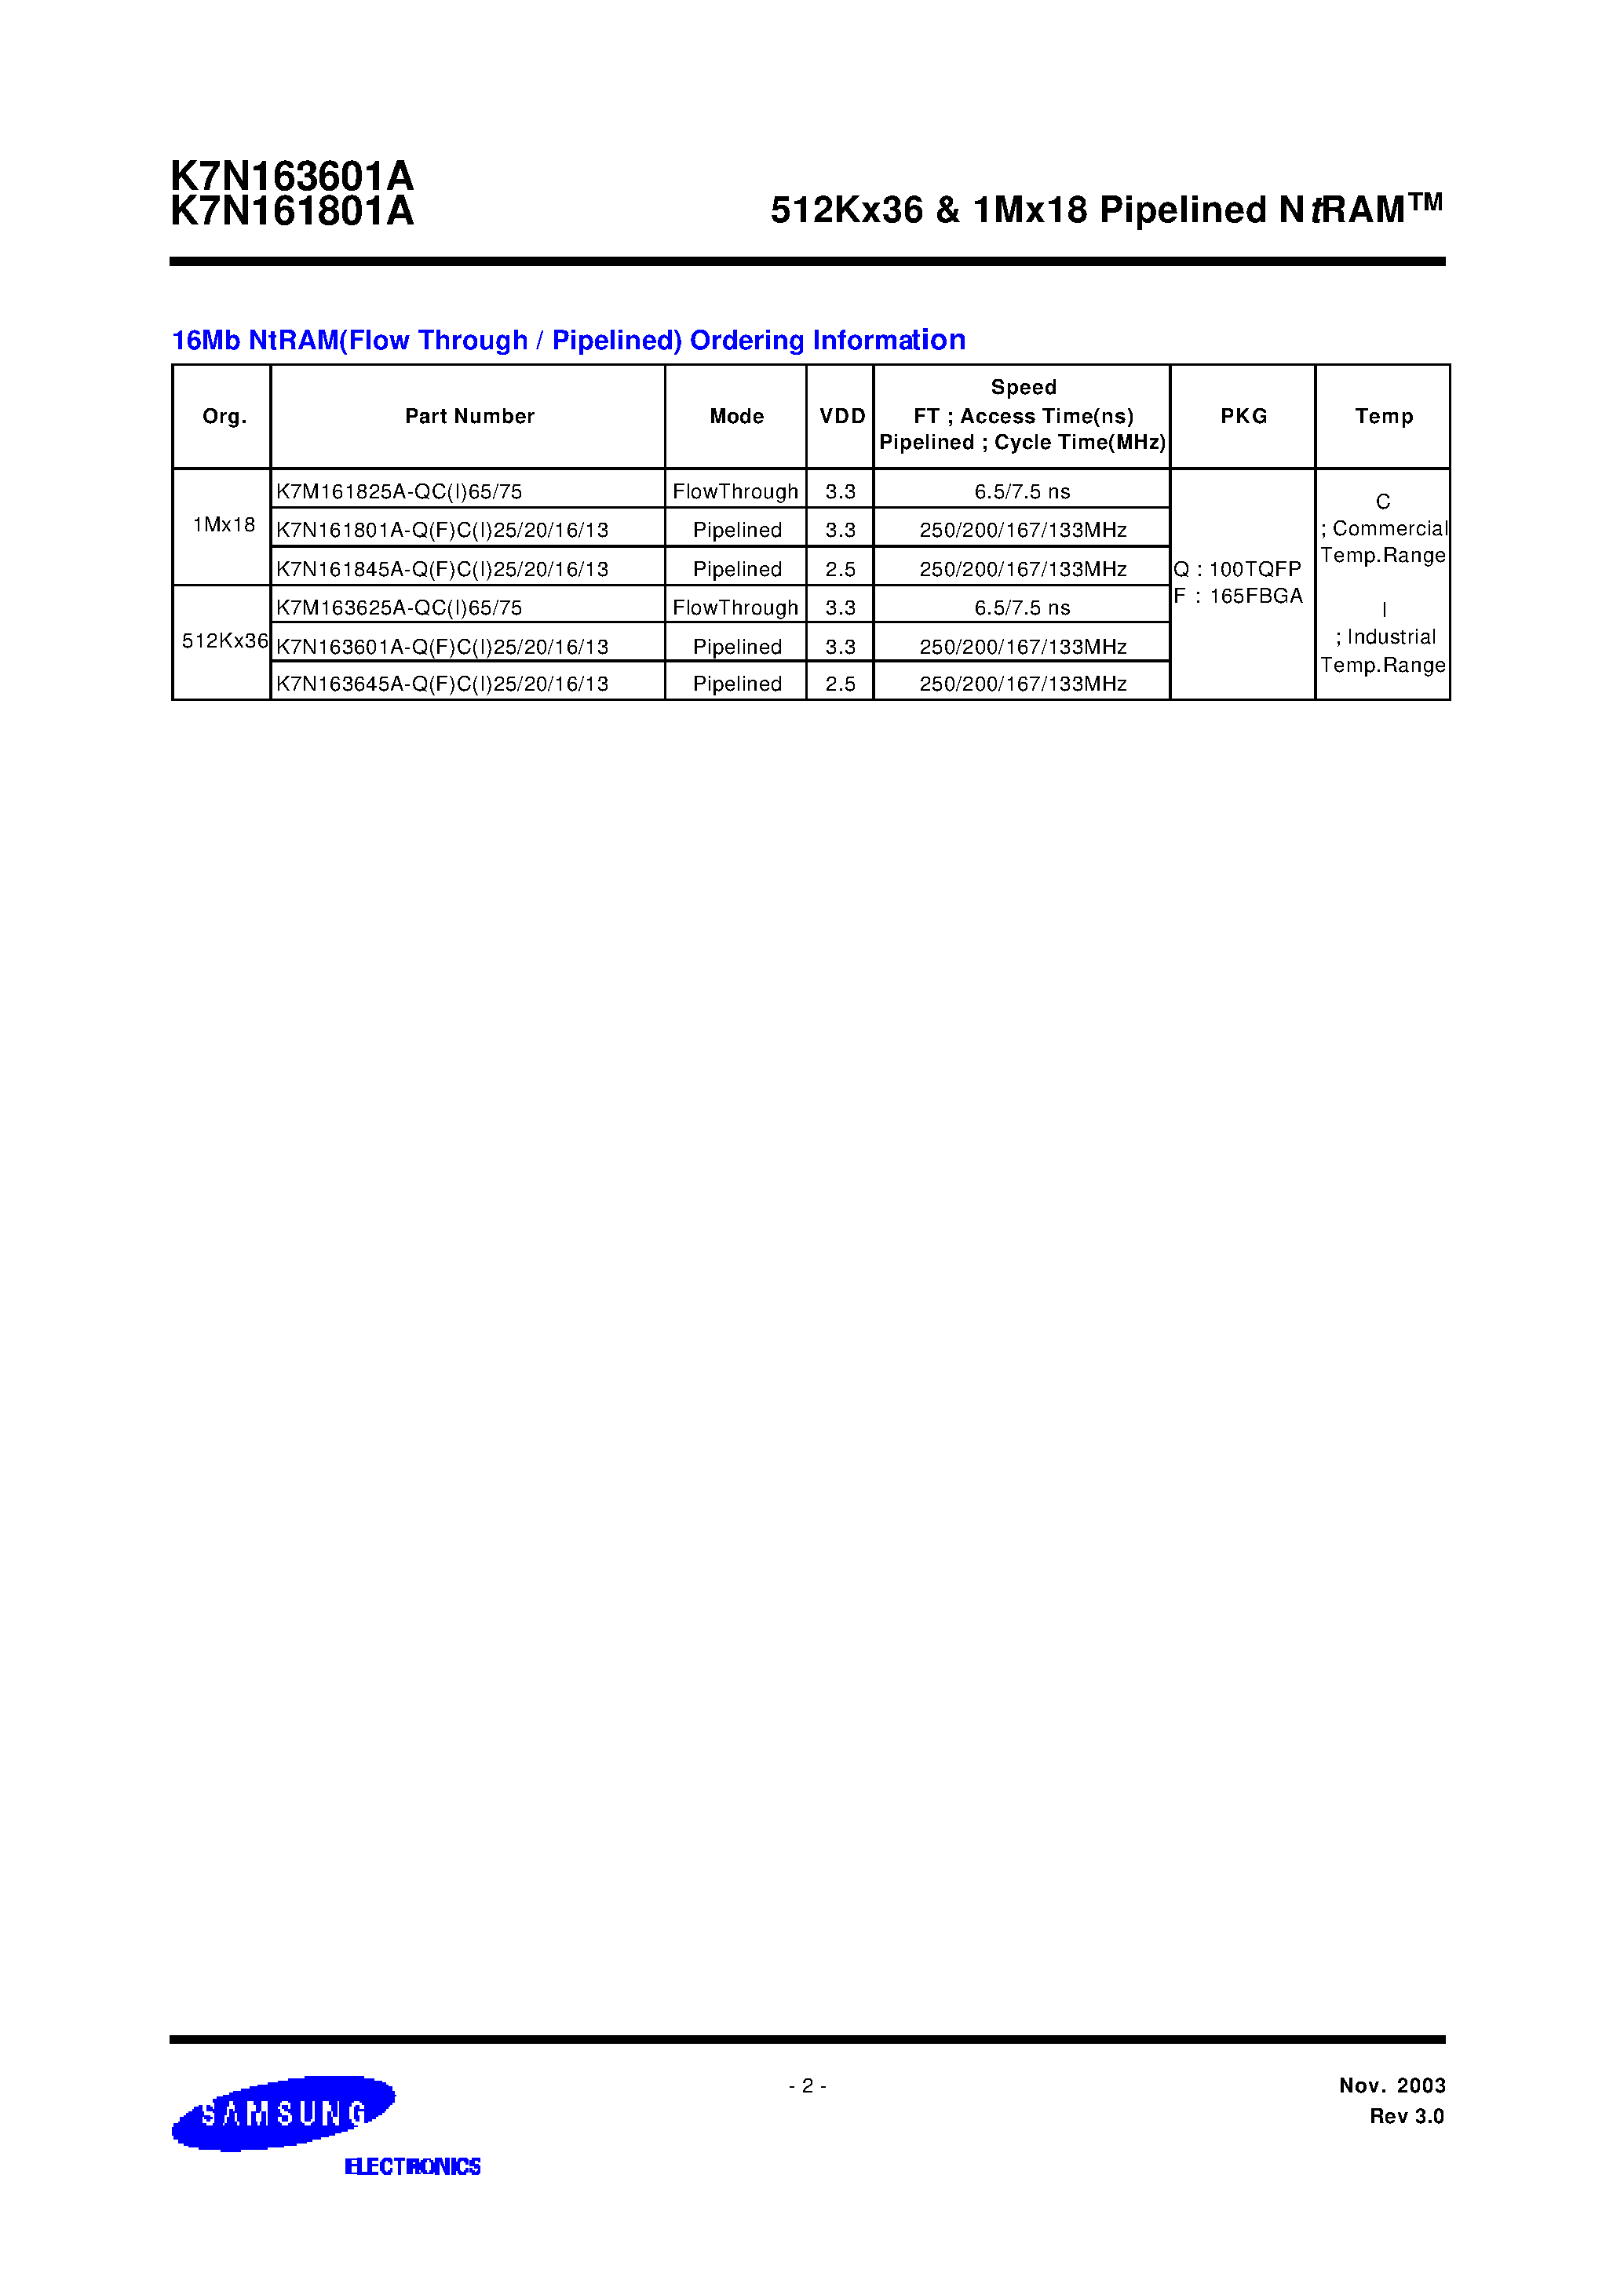 Datasheet K7N163601A-Q(F)C(I)13 - 512Kx36 & 1Mx18 Pipelined NtRAM page 2